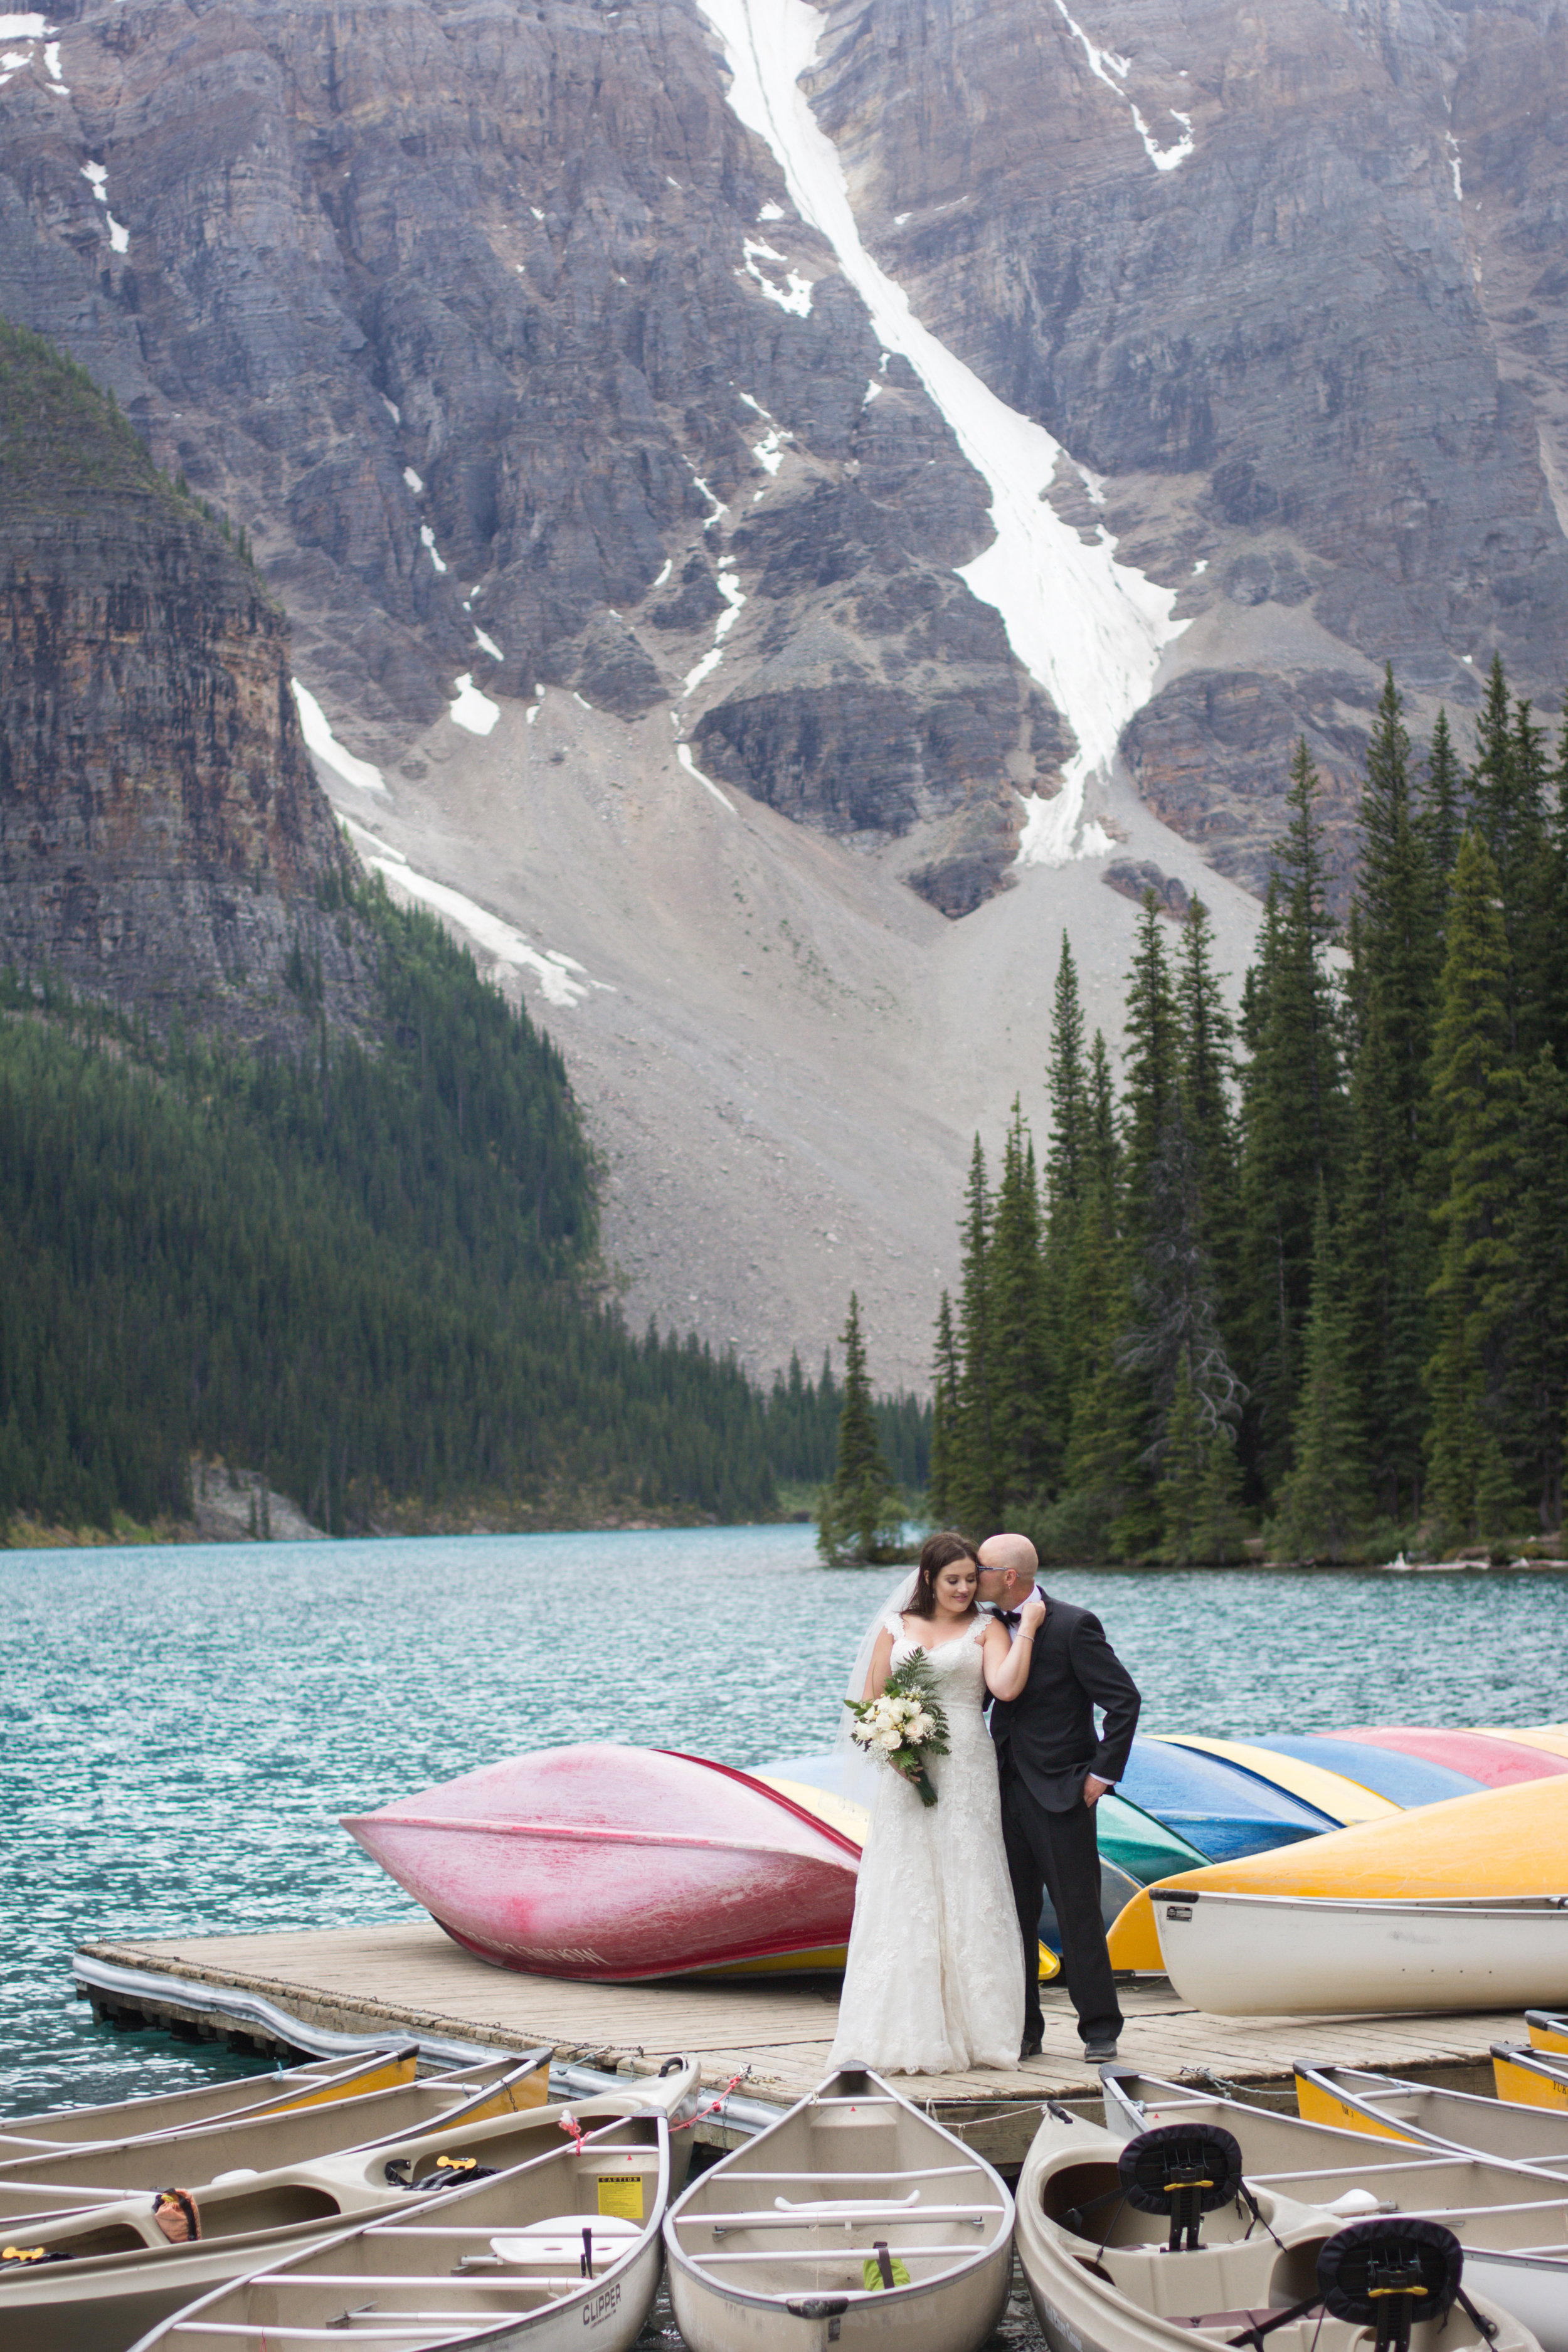  Wedding Photography in Banff at Morraine Lake | Calgary Alberta Wedding Photographer Ashley Parkins 